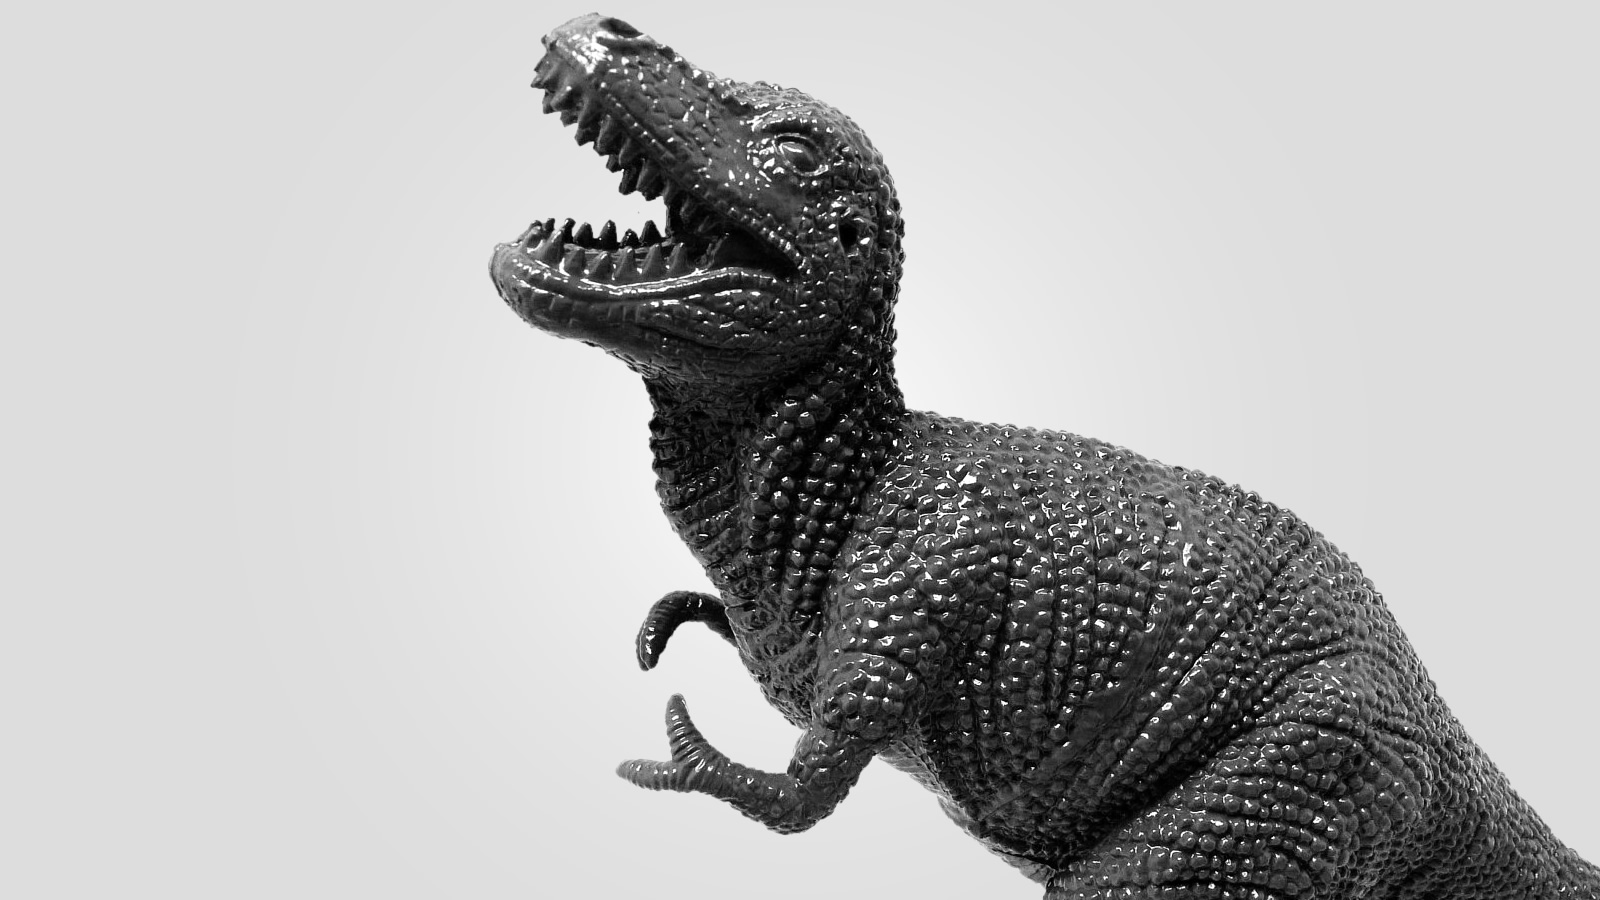 A plastic toy dinosaur